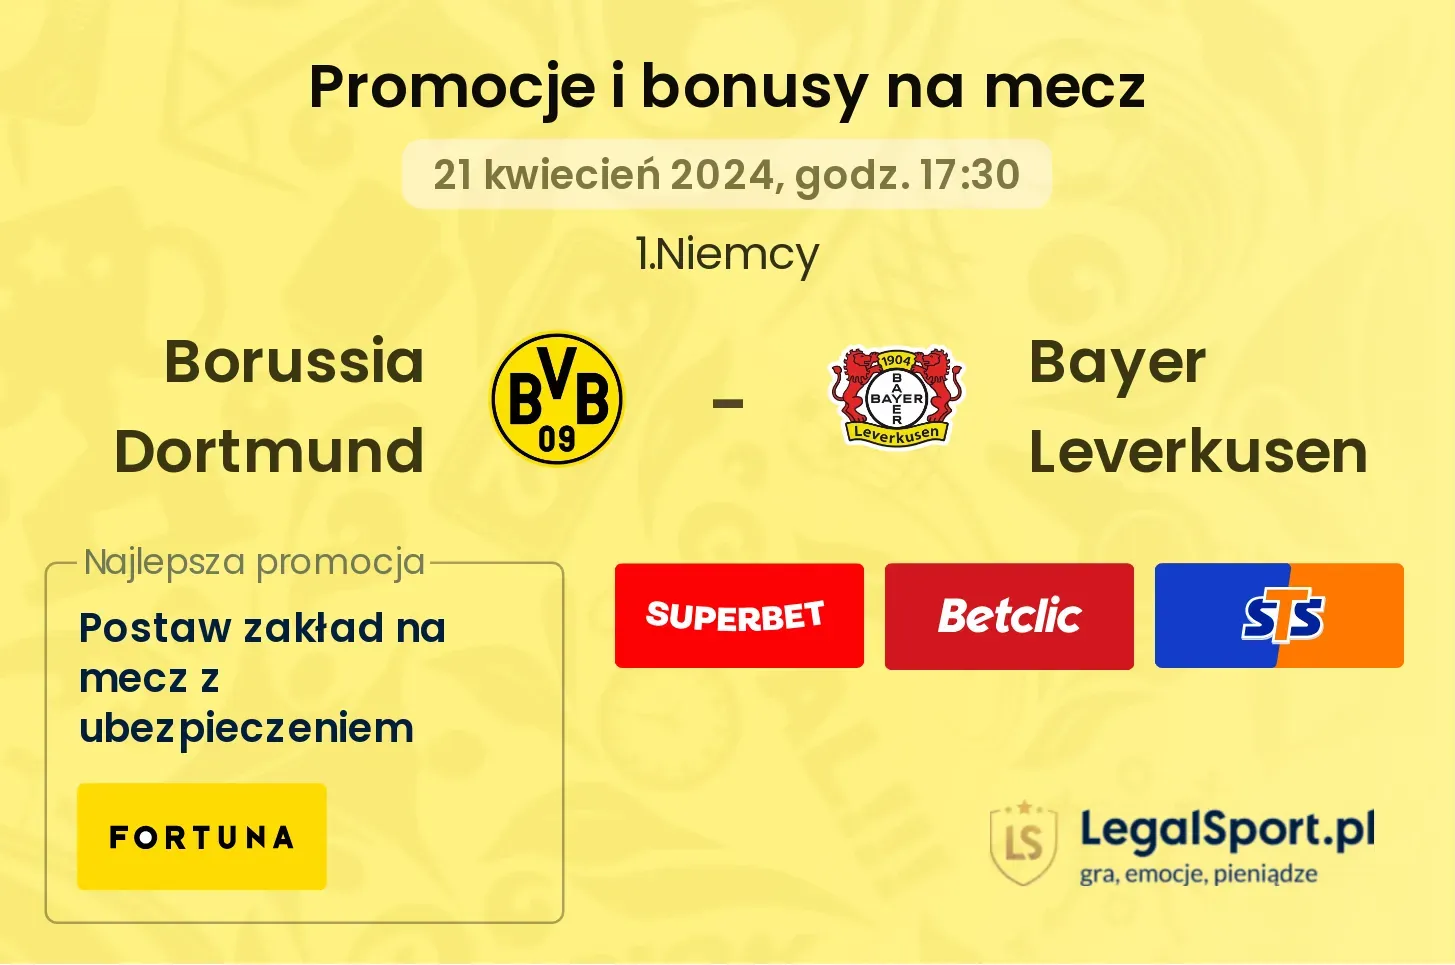 Borussia Dortmund - Bayer Leverkusen promocje bonusy na mecz